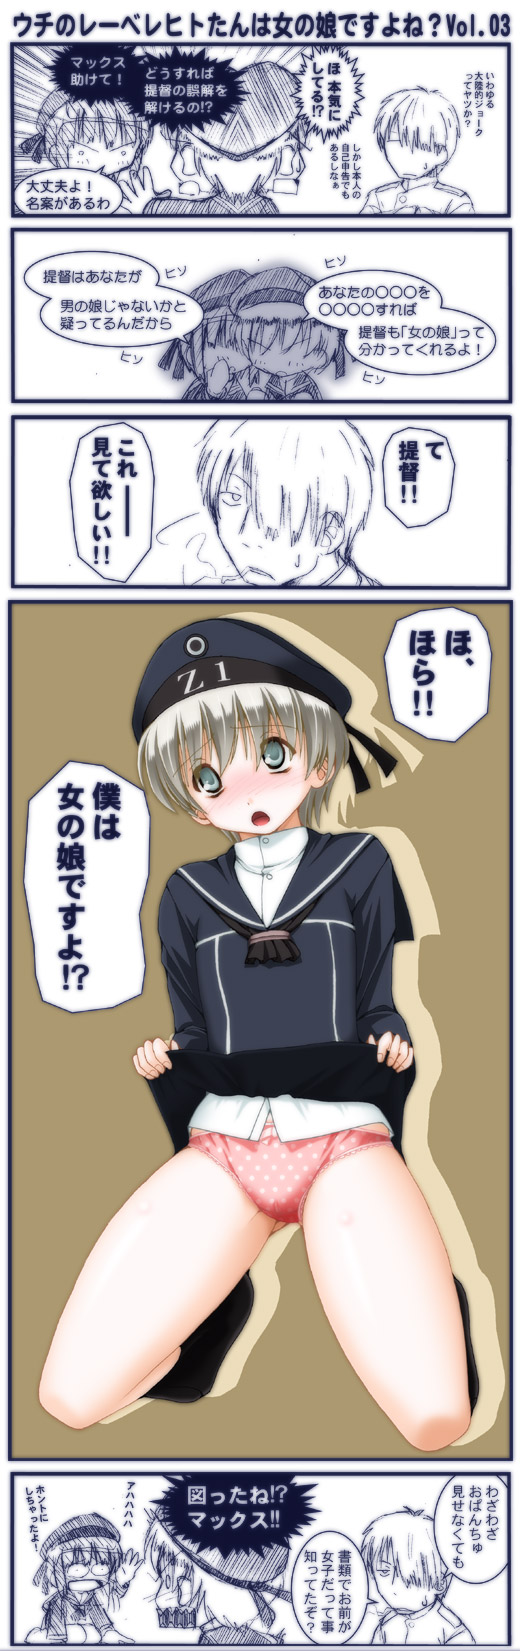 admiral, z1 leberecht maass, z3 max schultz, and ginko (kantai collection and 1 more) drawn by keito_(keito-ya)